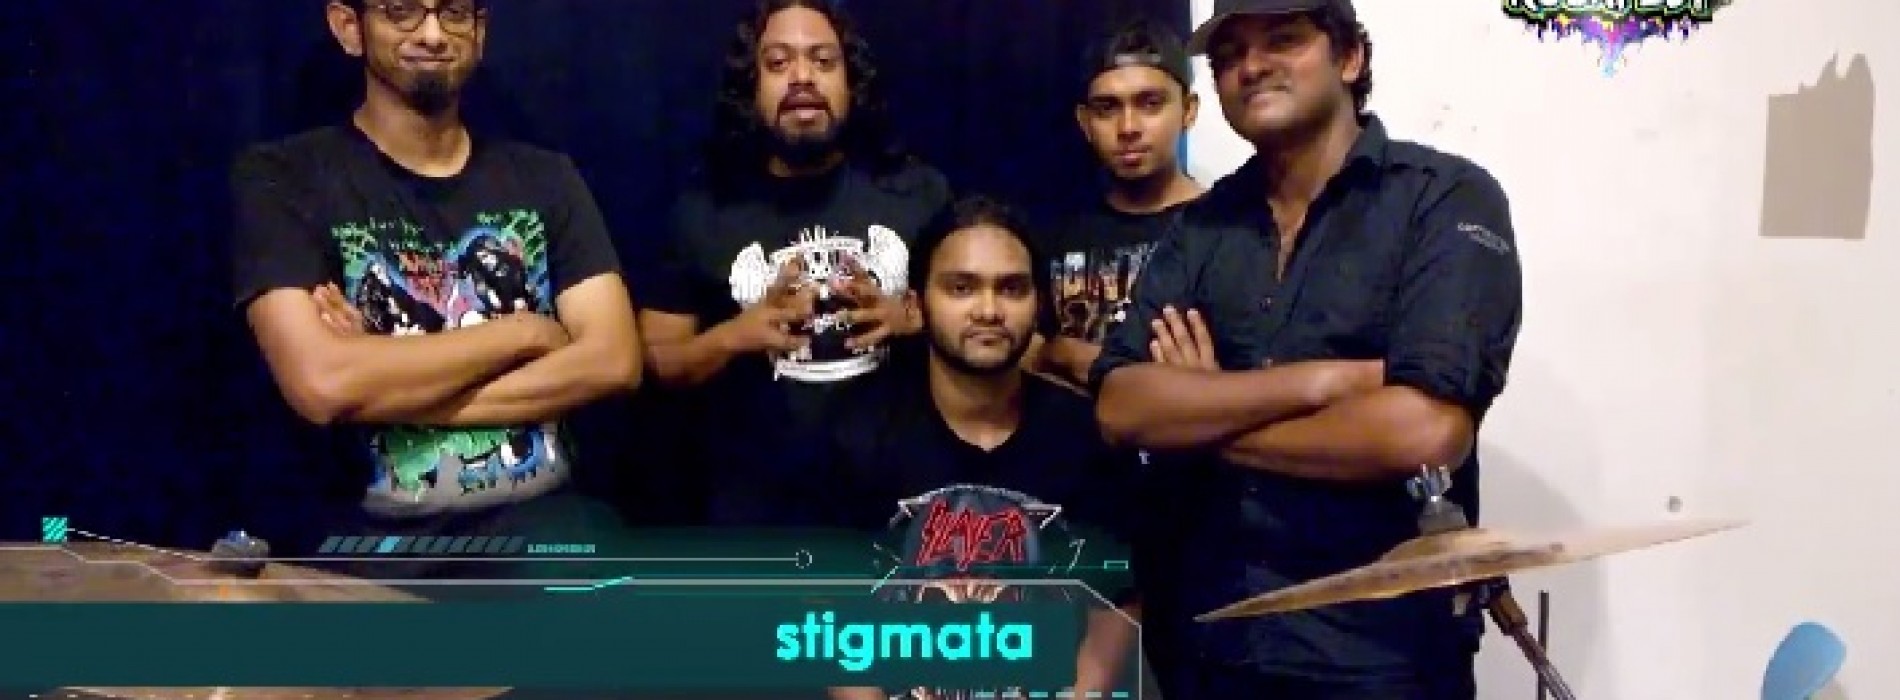 Stigmata Off To The South Asian Rockfest